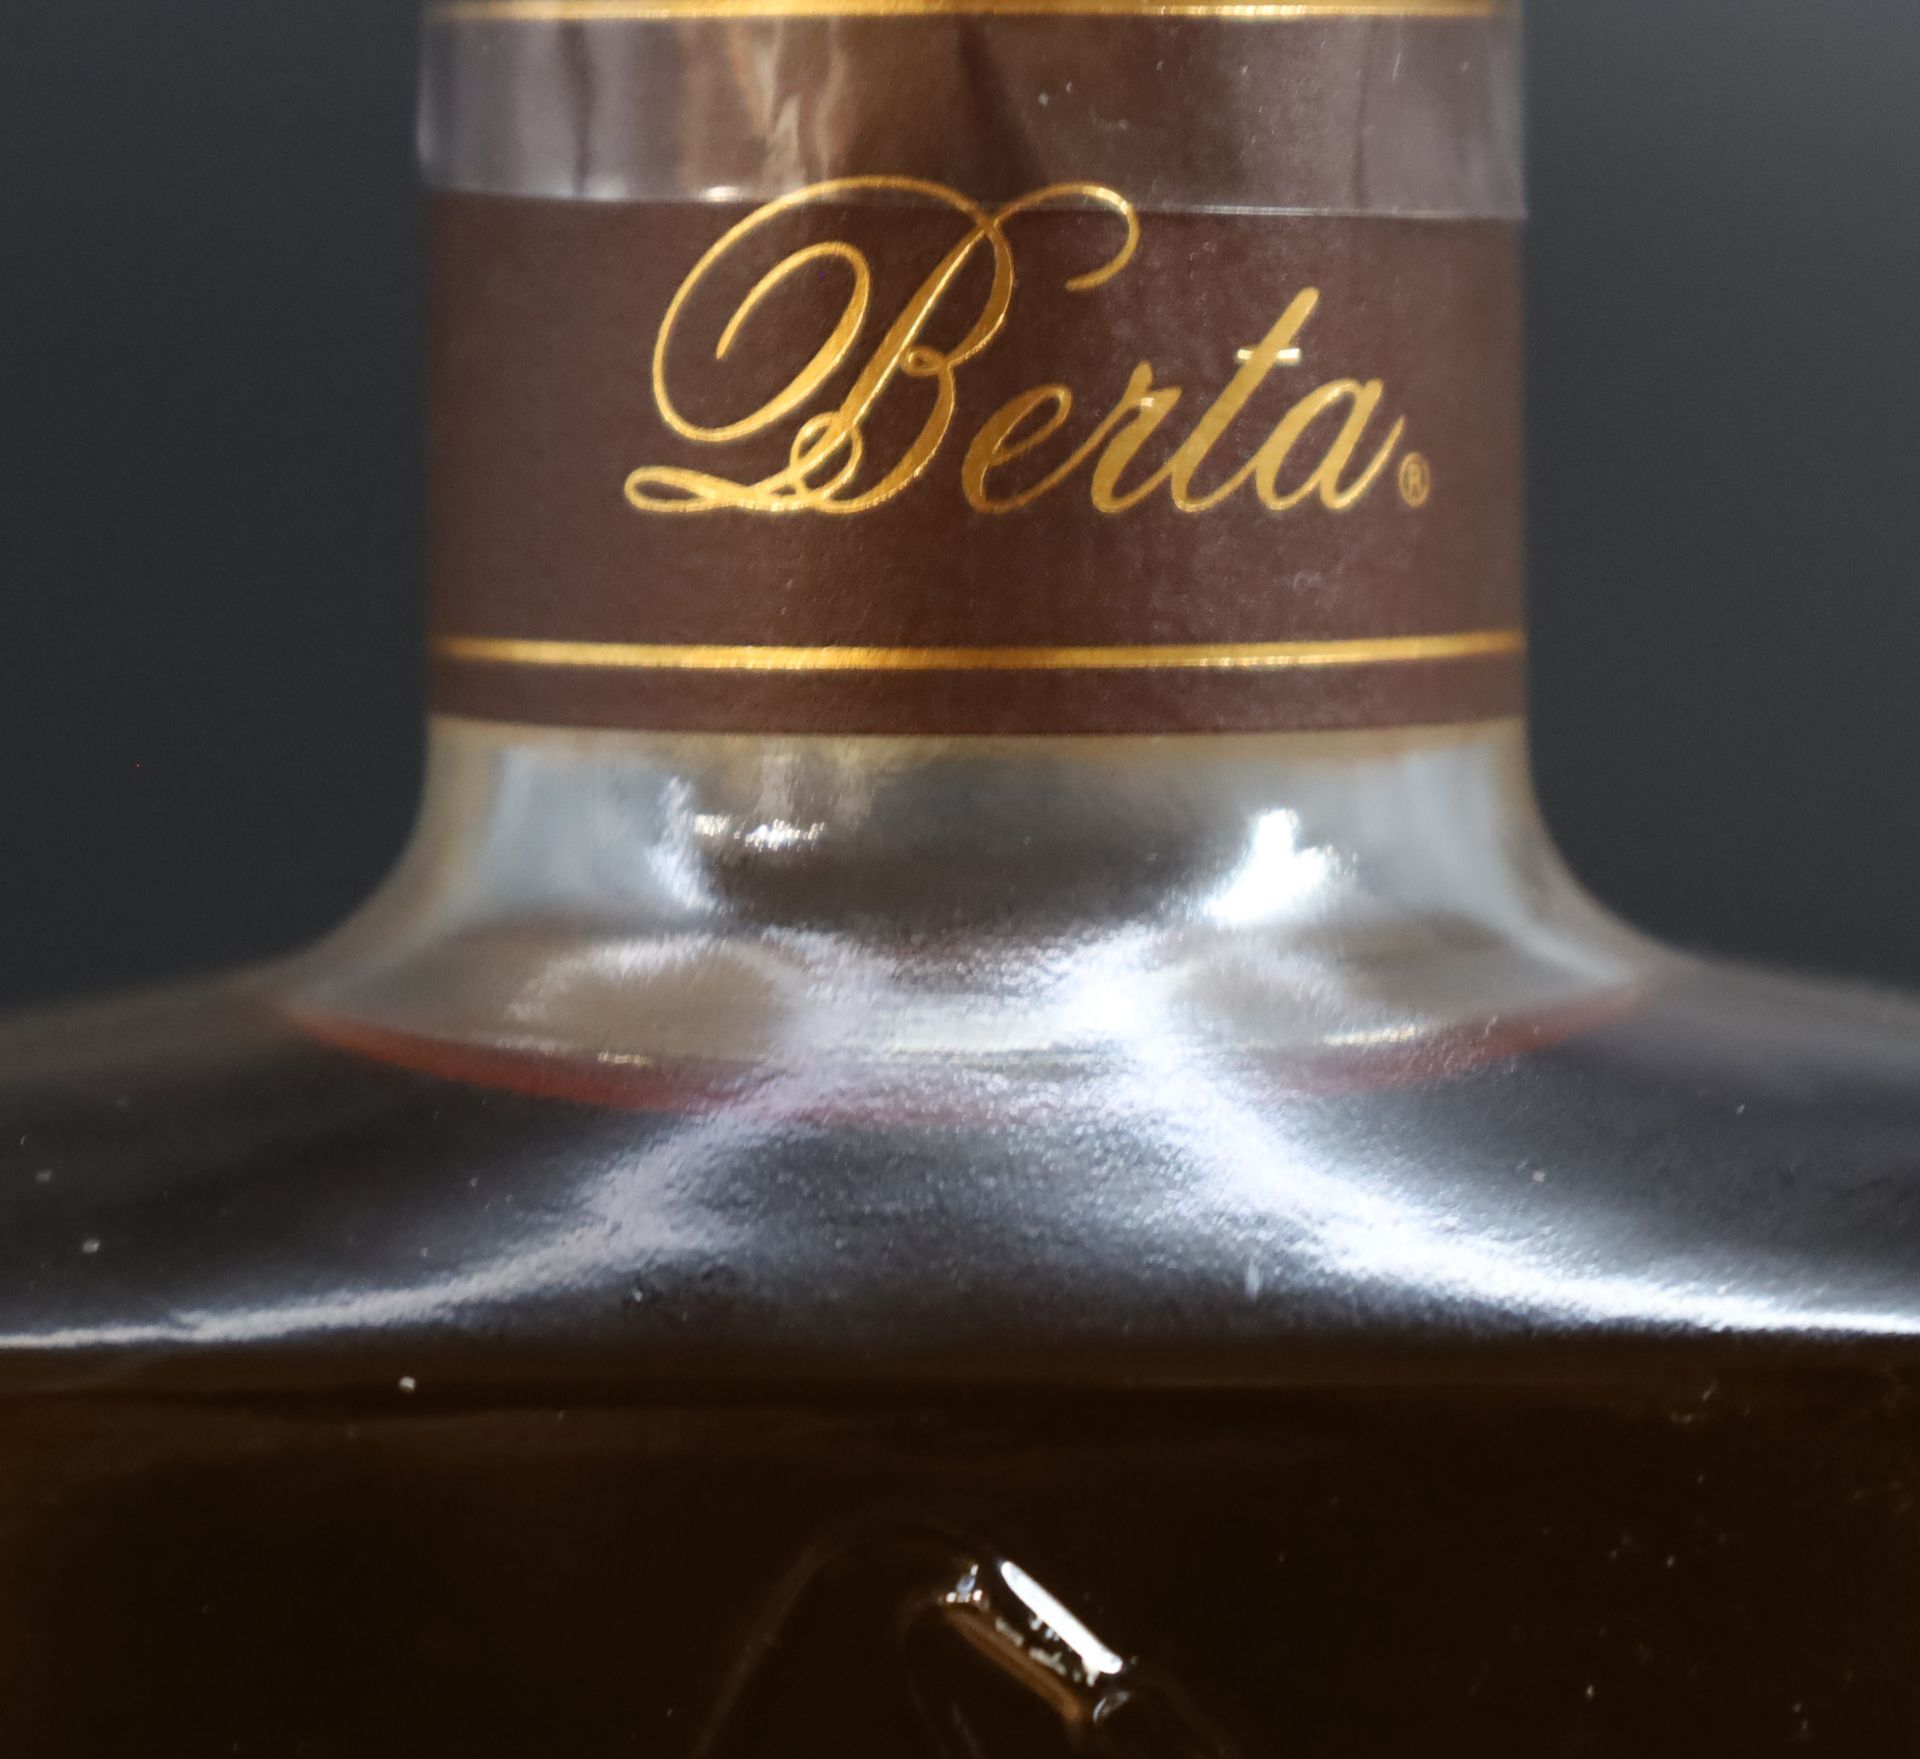 1 Flasche Grappa. BERTA. "Roccanivo". Italien. 2006. - Bild 2 aus 5